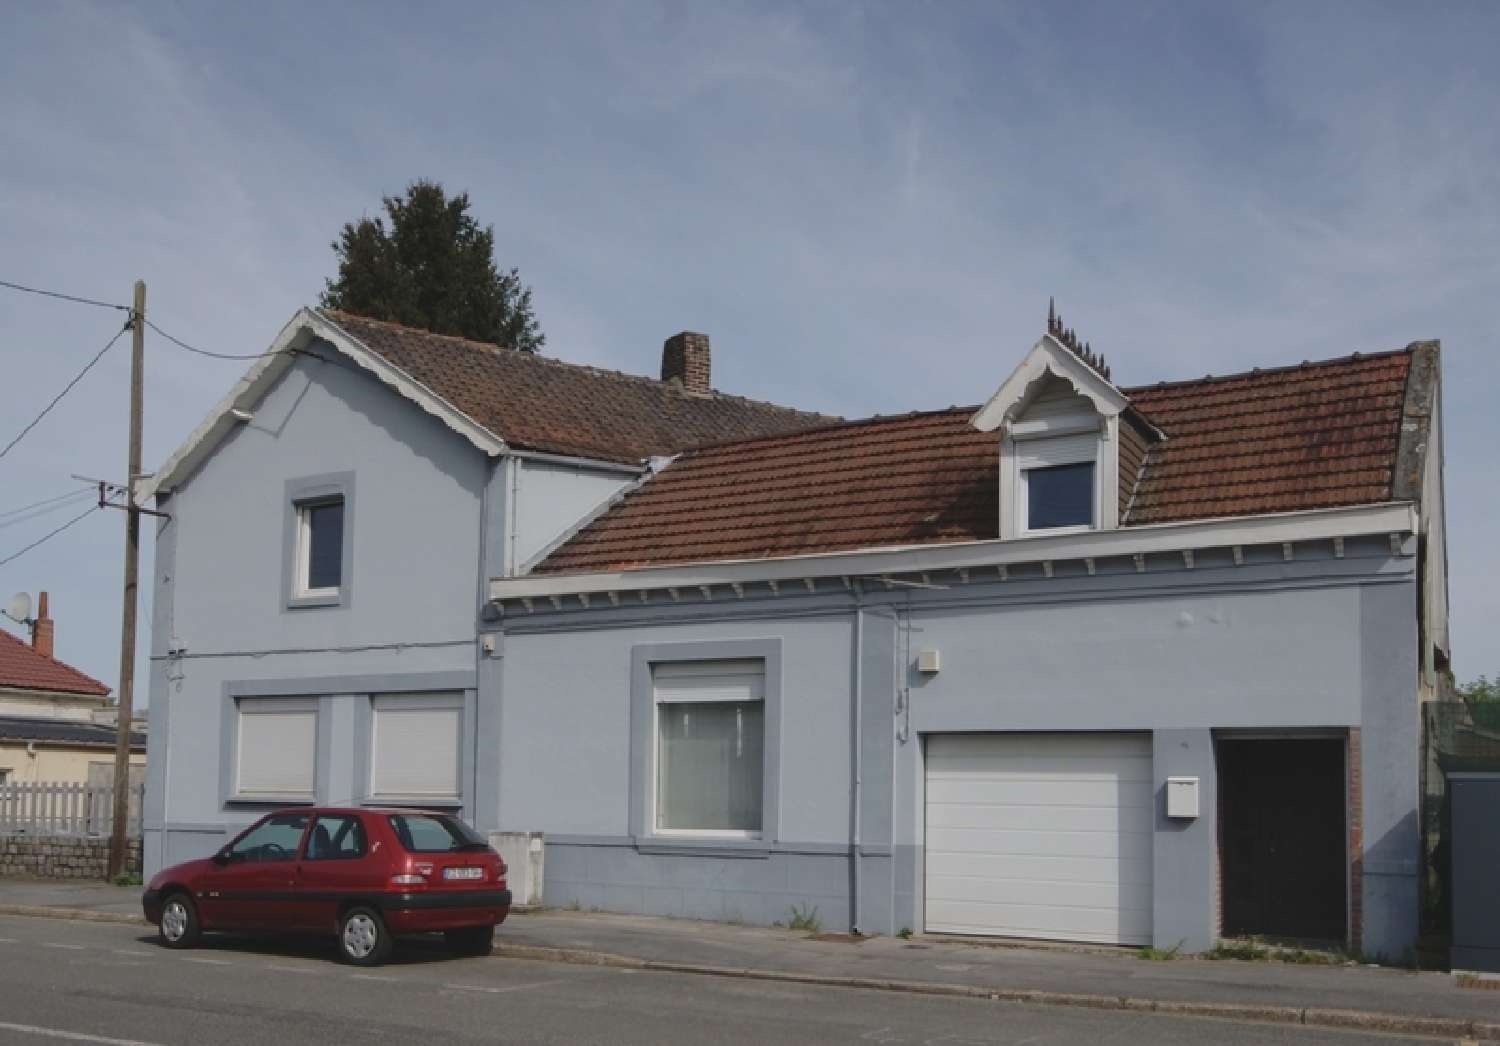  à vendre maison Beuvry Pas-de-Calais 1